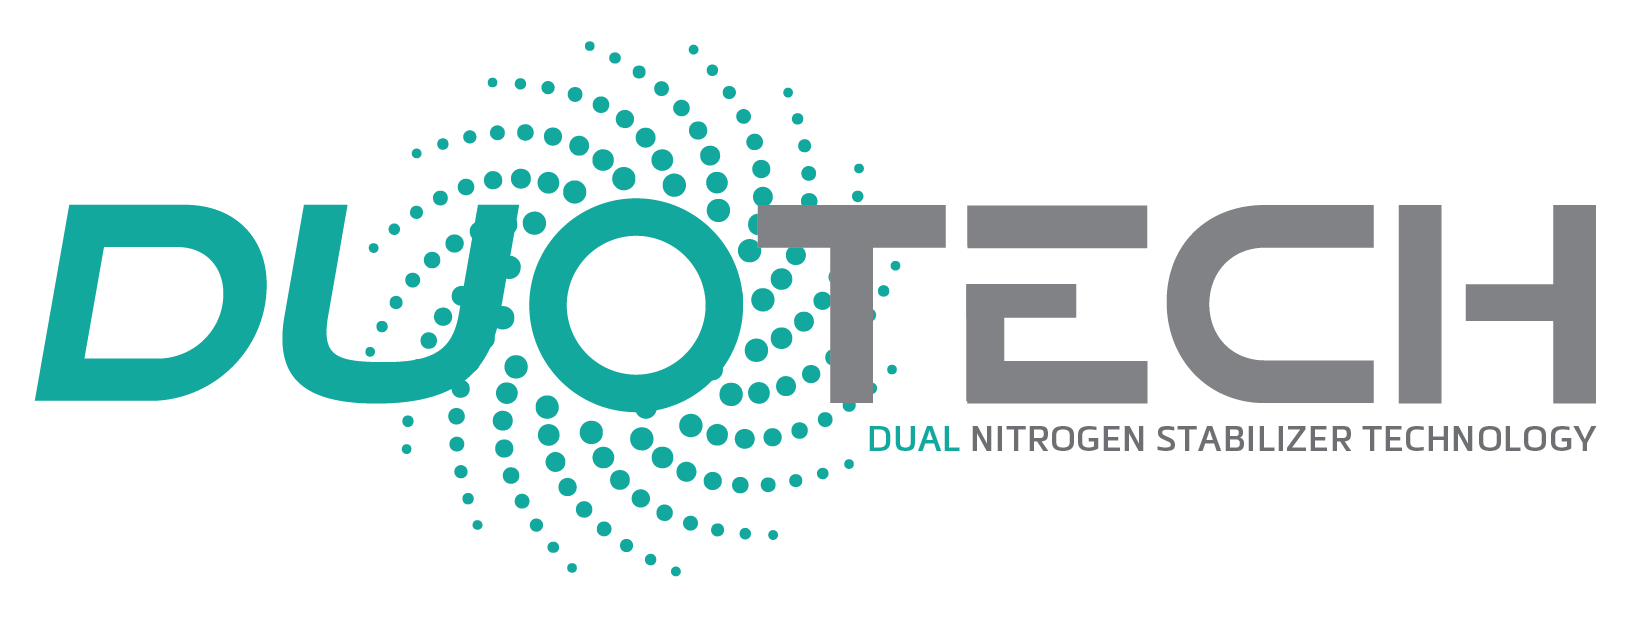 a logo for duotech dual nitrogen stabilizer technology